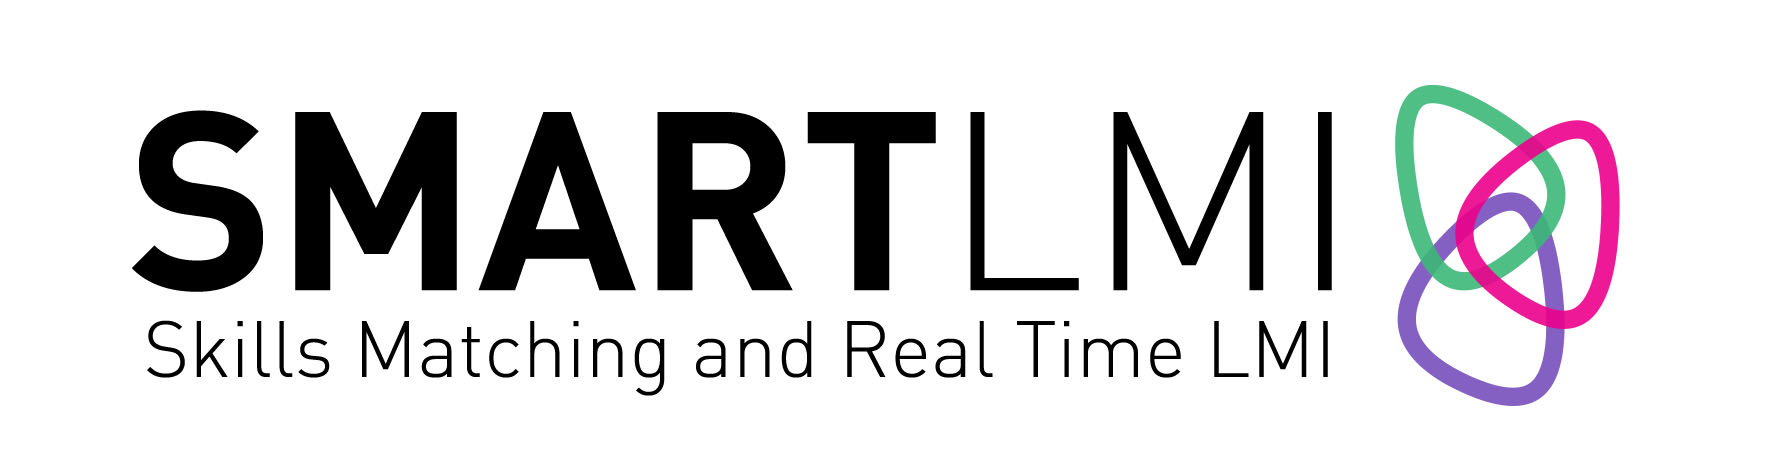 SKILLS MATCHING AND REAL-TIME LMI/ SMART LMI (2017-2020)